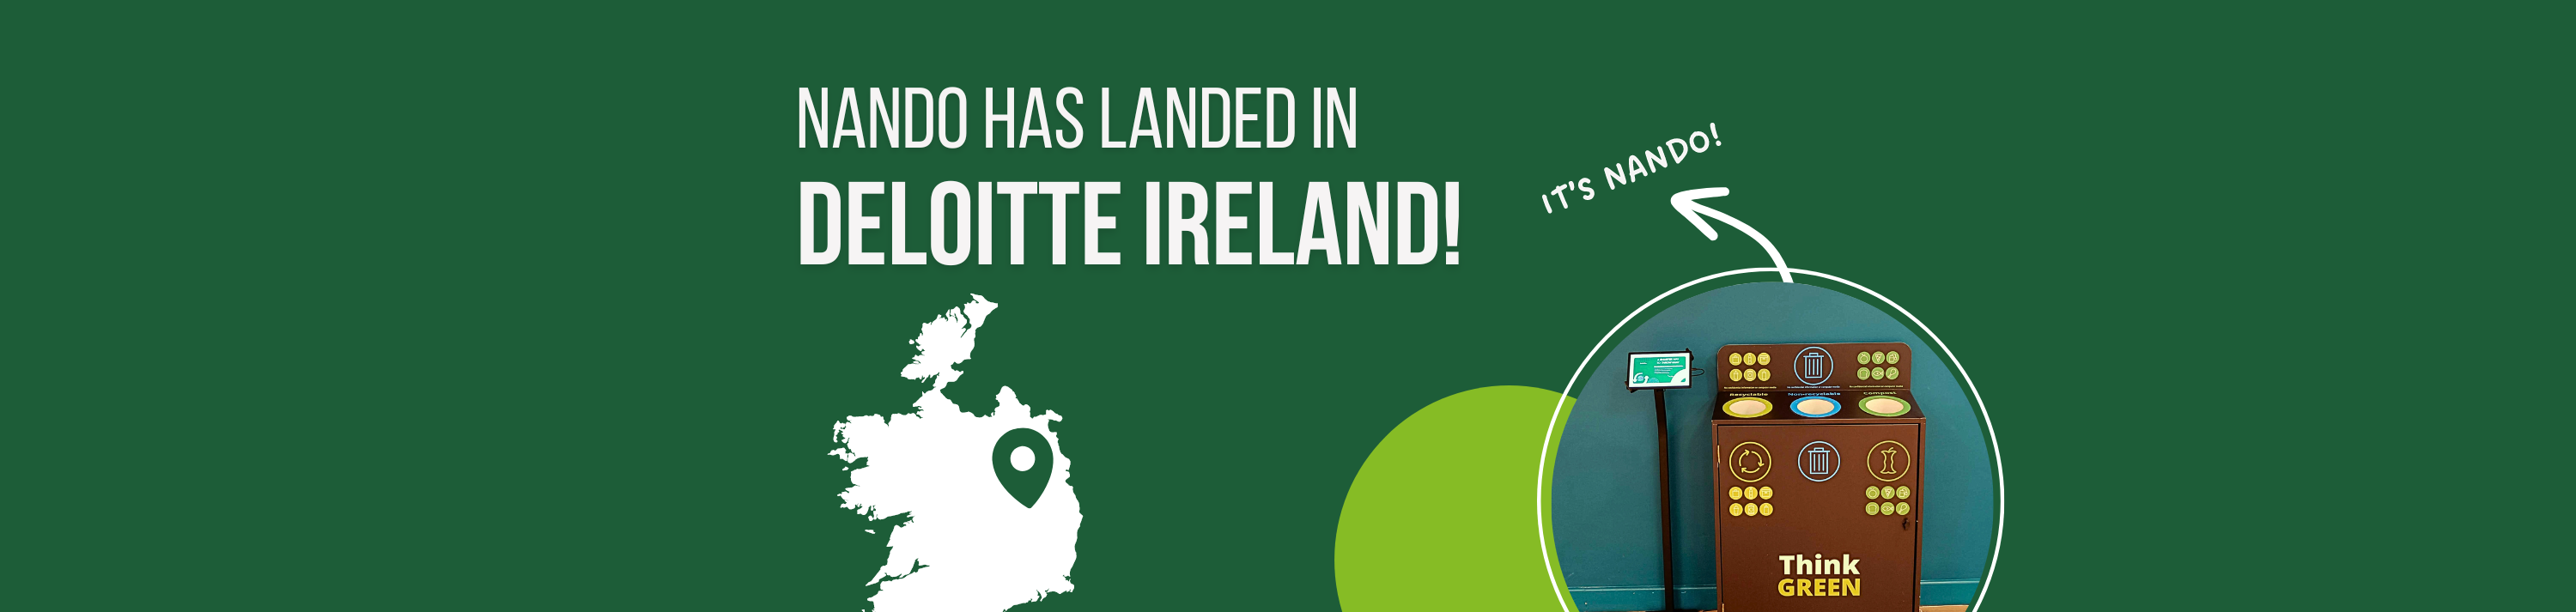 NANDO has landed in Deloitte Ireland!